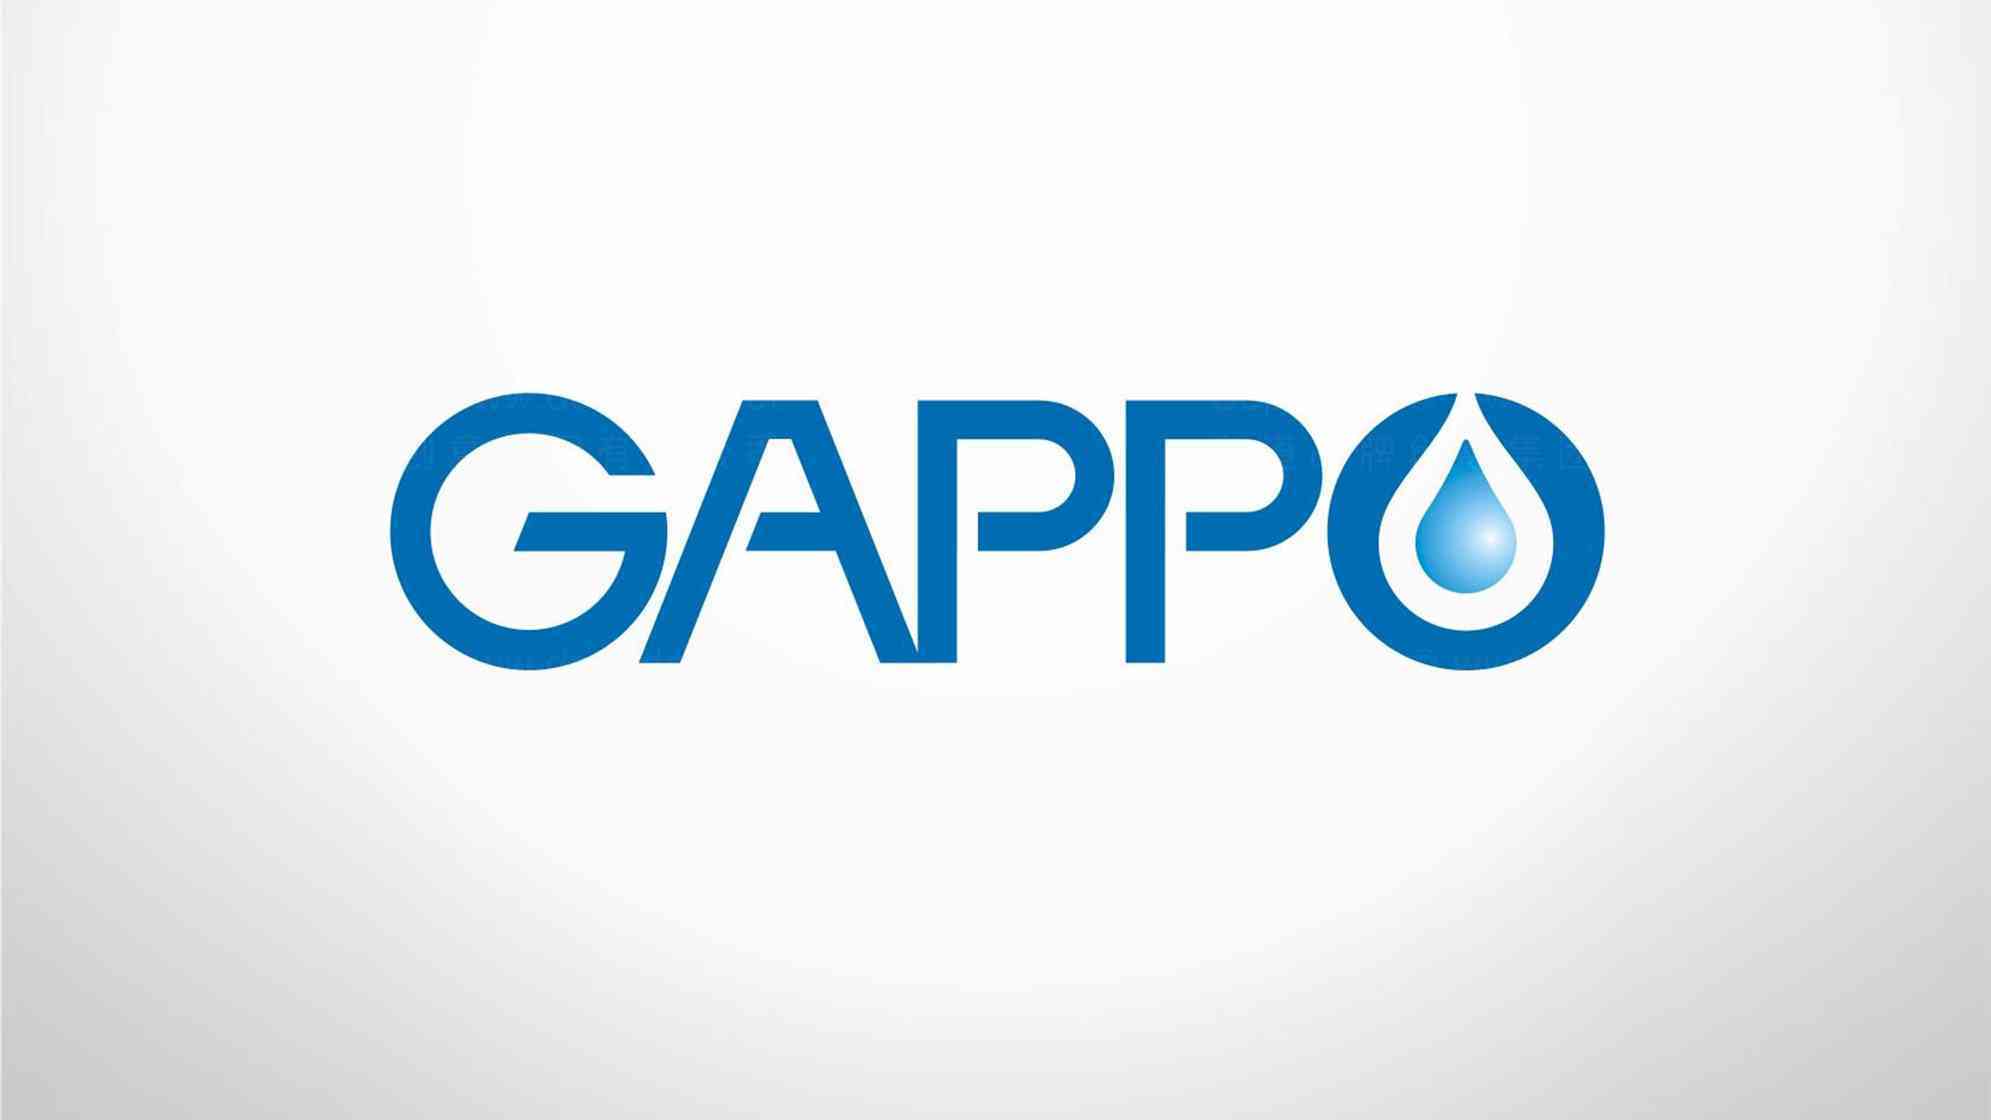 GAPPO卫浴logo设计图片素材